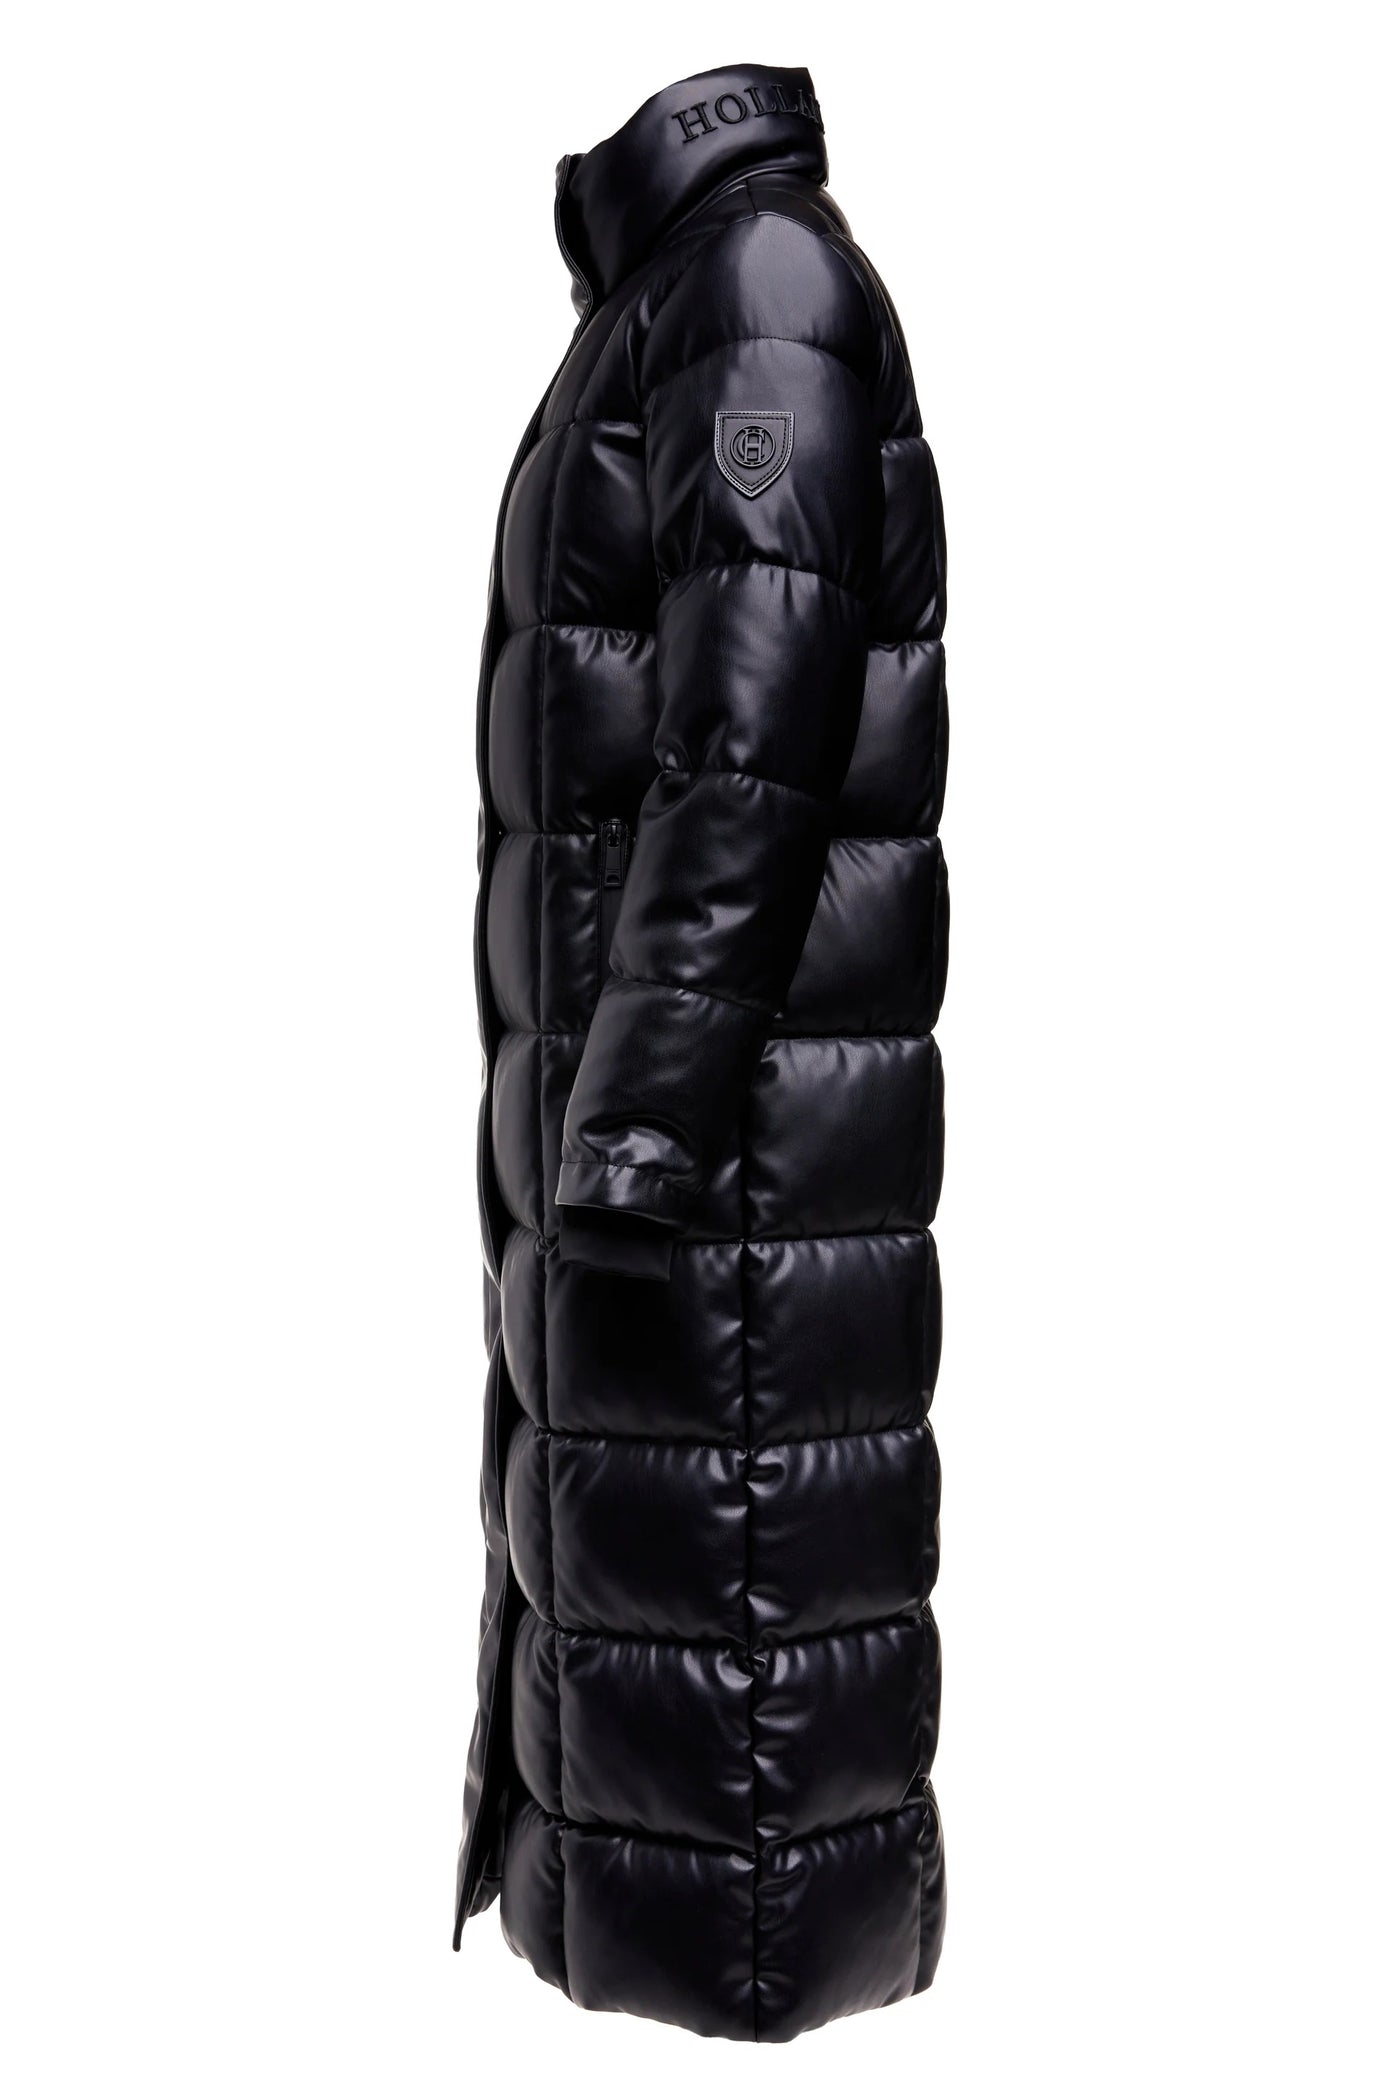 Holland Cooper Crawford Longline Coat in Black Side